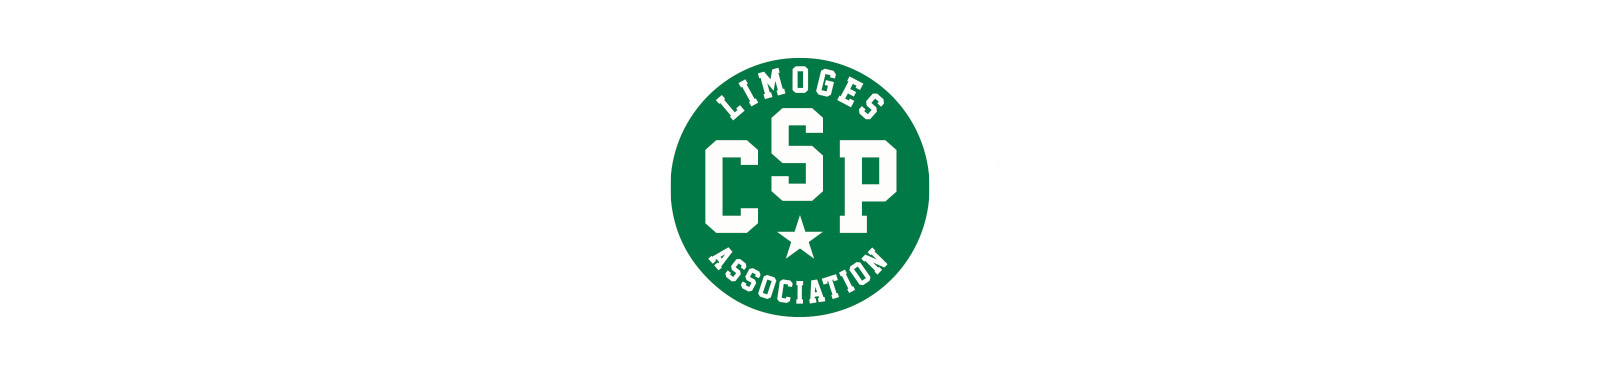 Association Limoges CSP